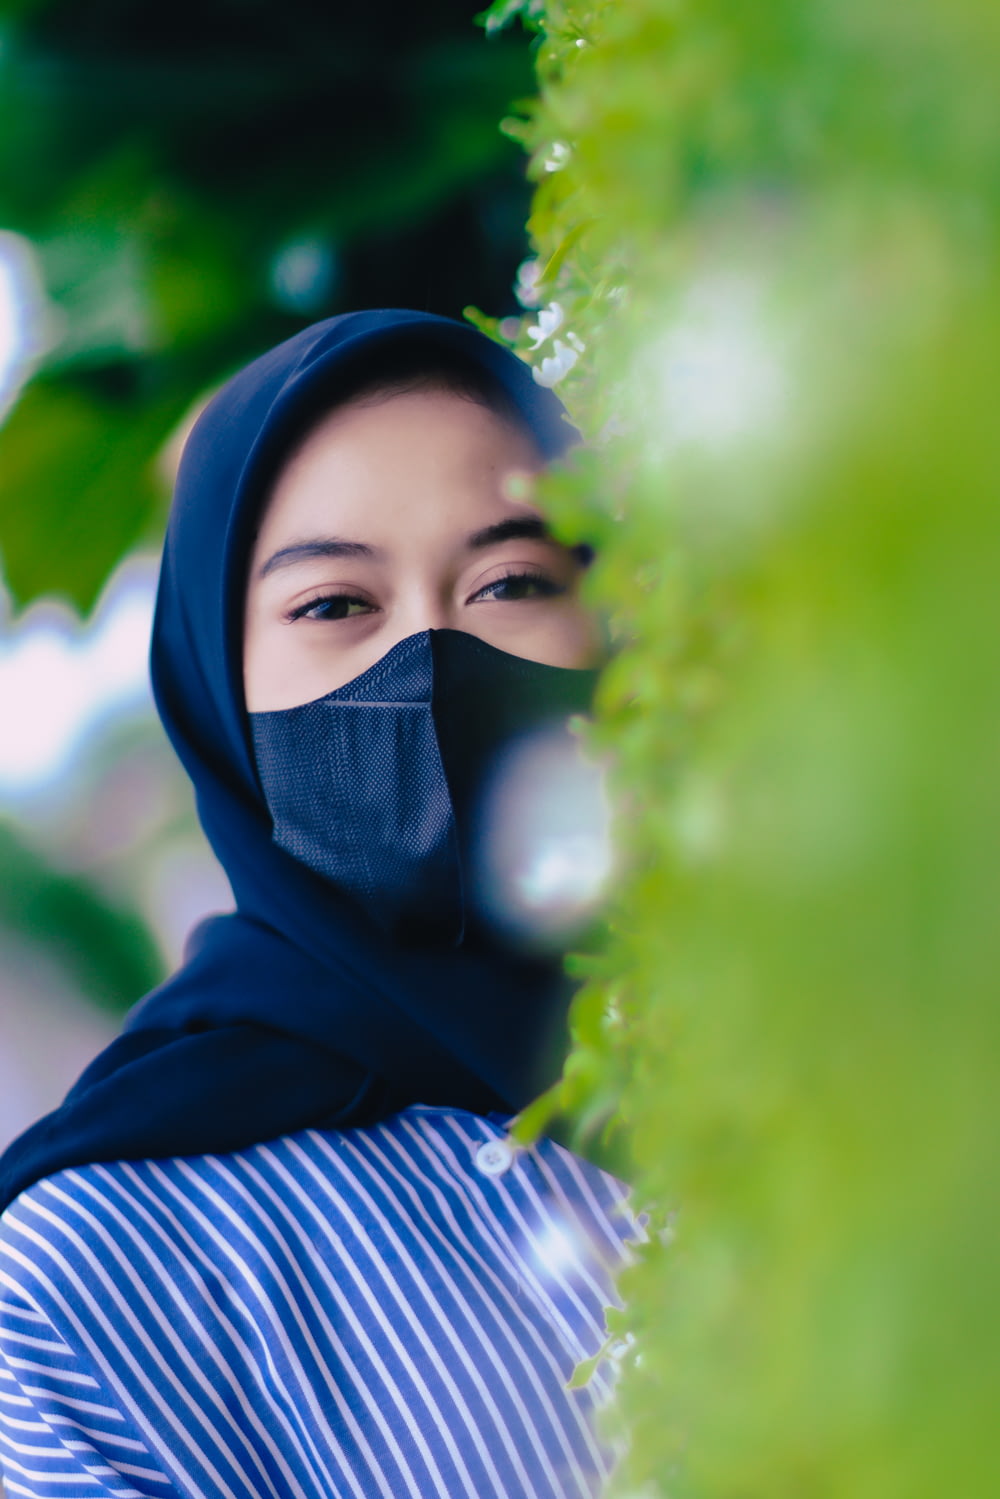 a woman wearing a blue hijab and a black mask